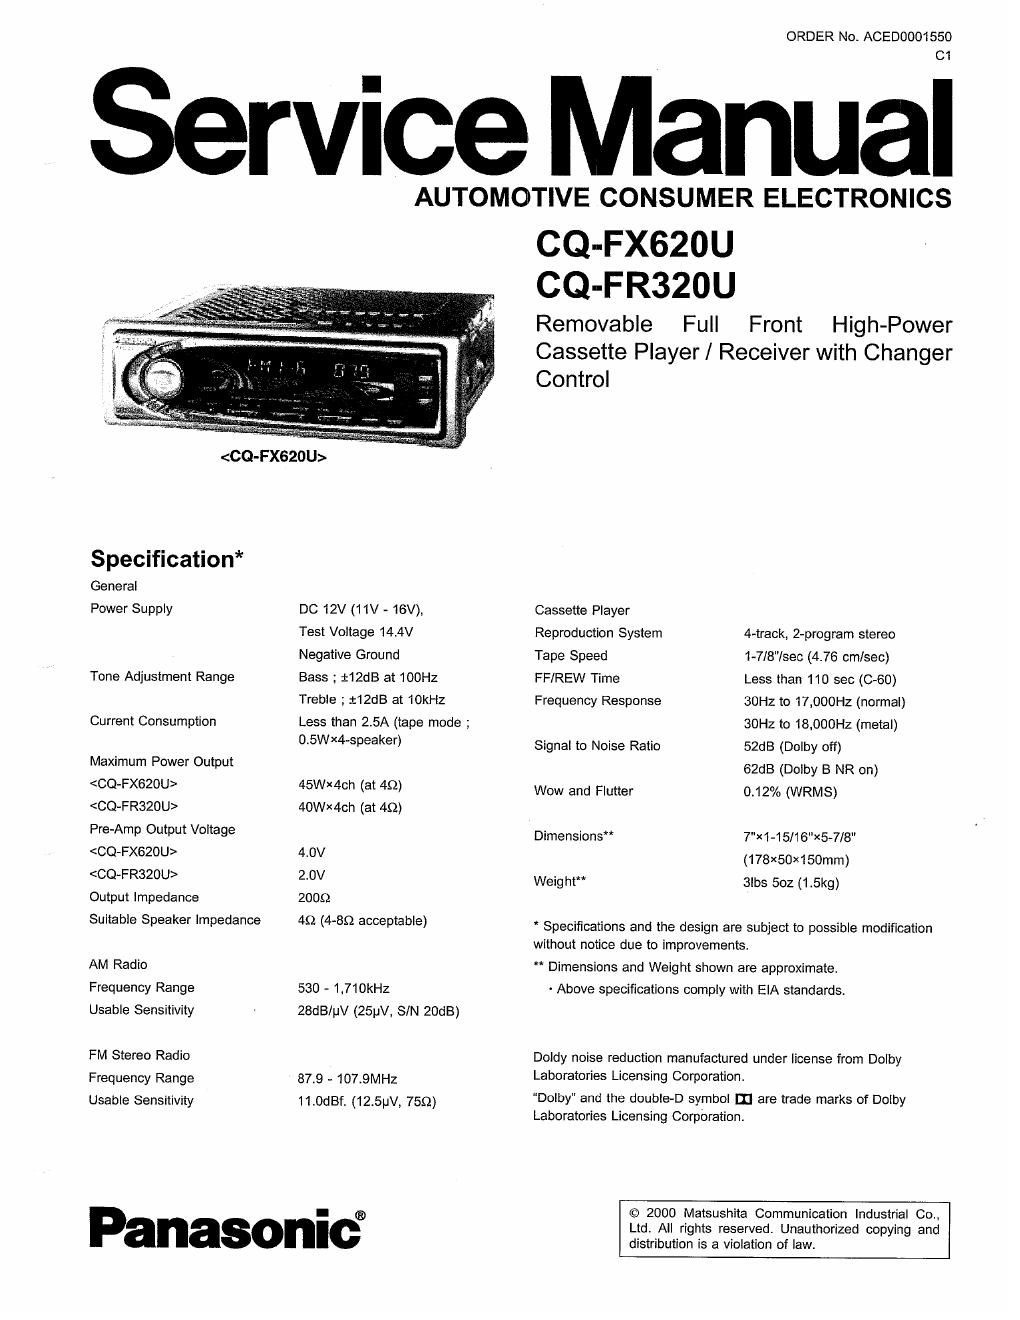 panasonic cq fr 320 service manual